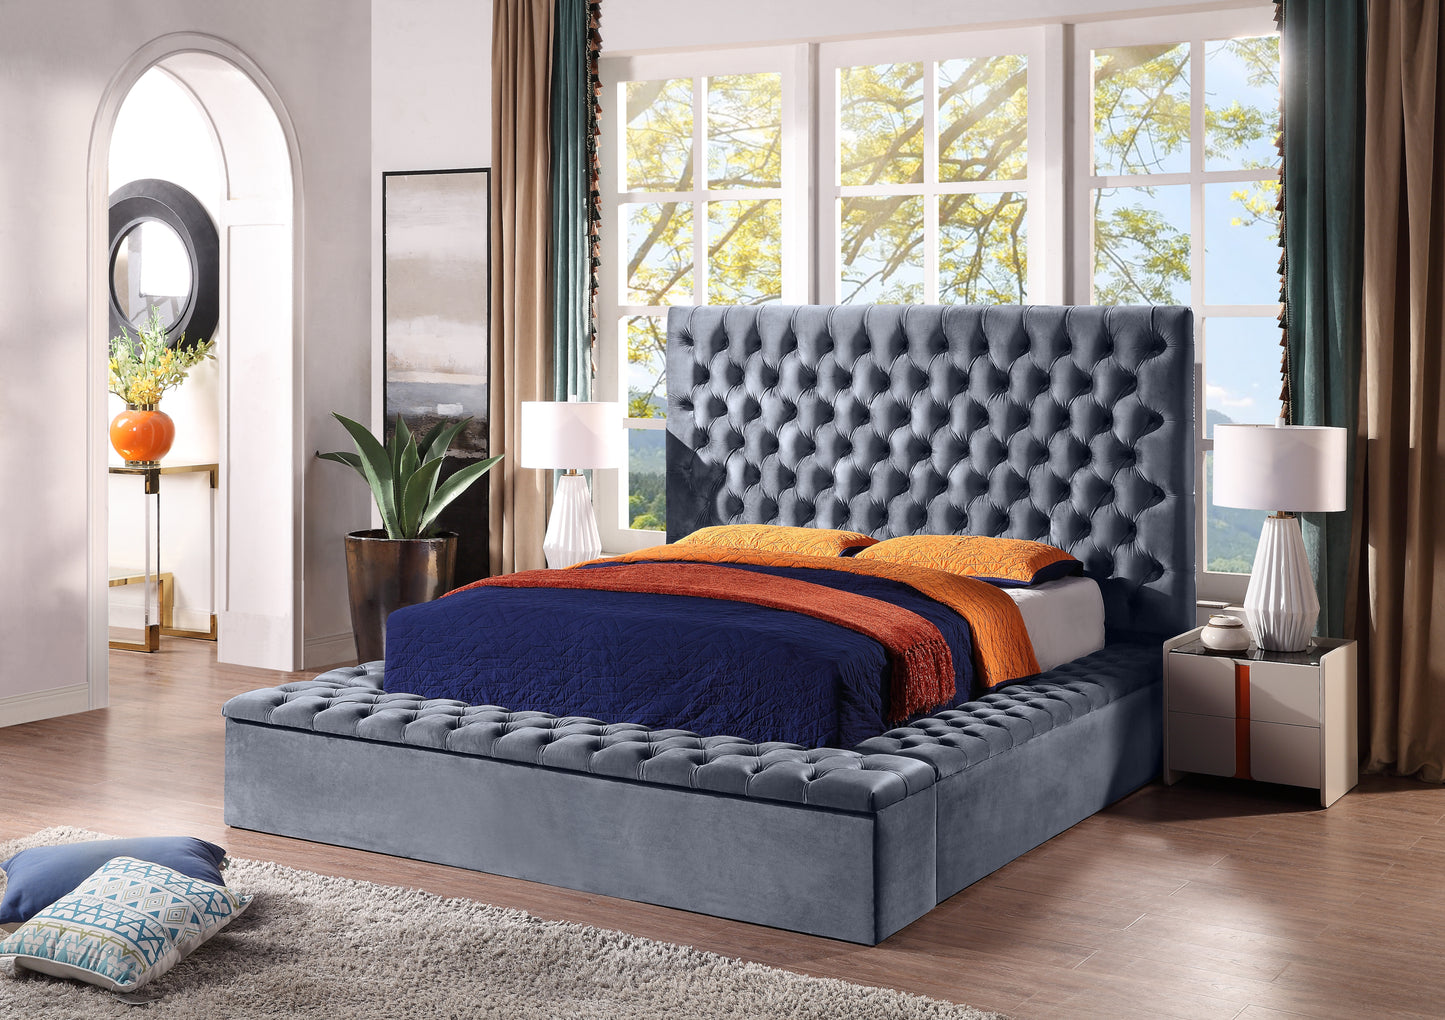 Queen Size Velvet Upholstered Platform Bed with Storage Locker, Deep Button Tufting, Solid Wood Frame, High-density Foam